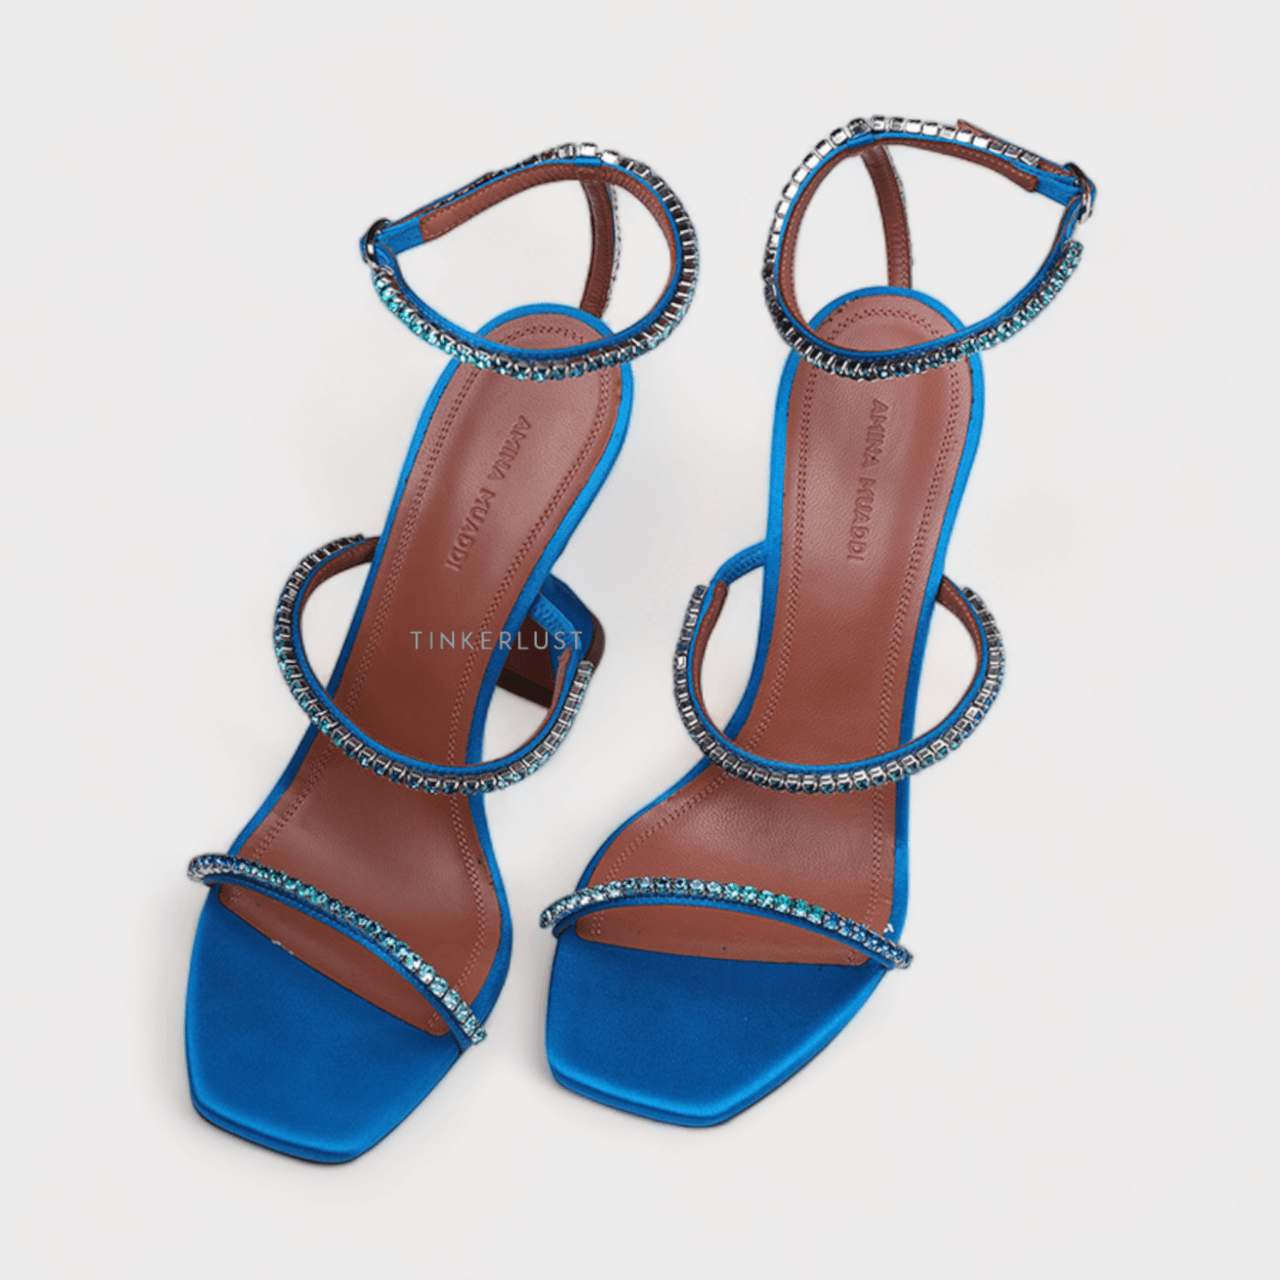 AMINA MUADDI Women Gilda Silk Sandals 95mm in Blue Satin with CrystalsAMINA MUADDI Women Gilda Silk Sandals 95mm in Blue Satin with Crystals